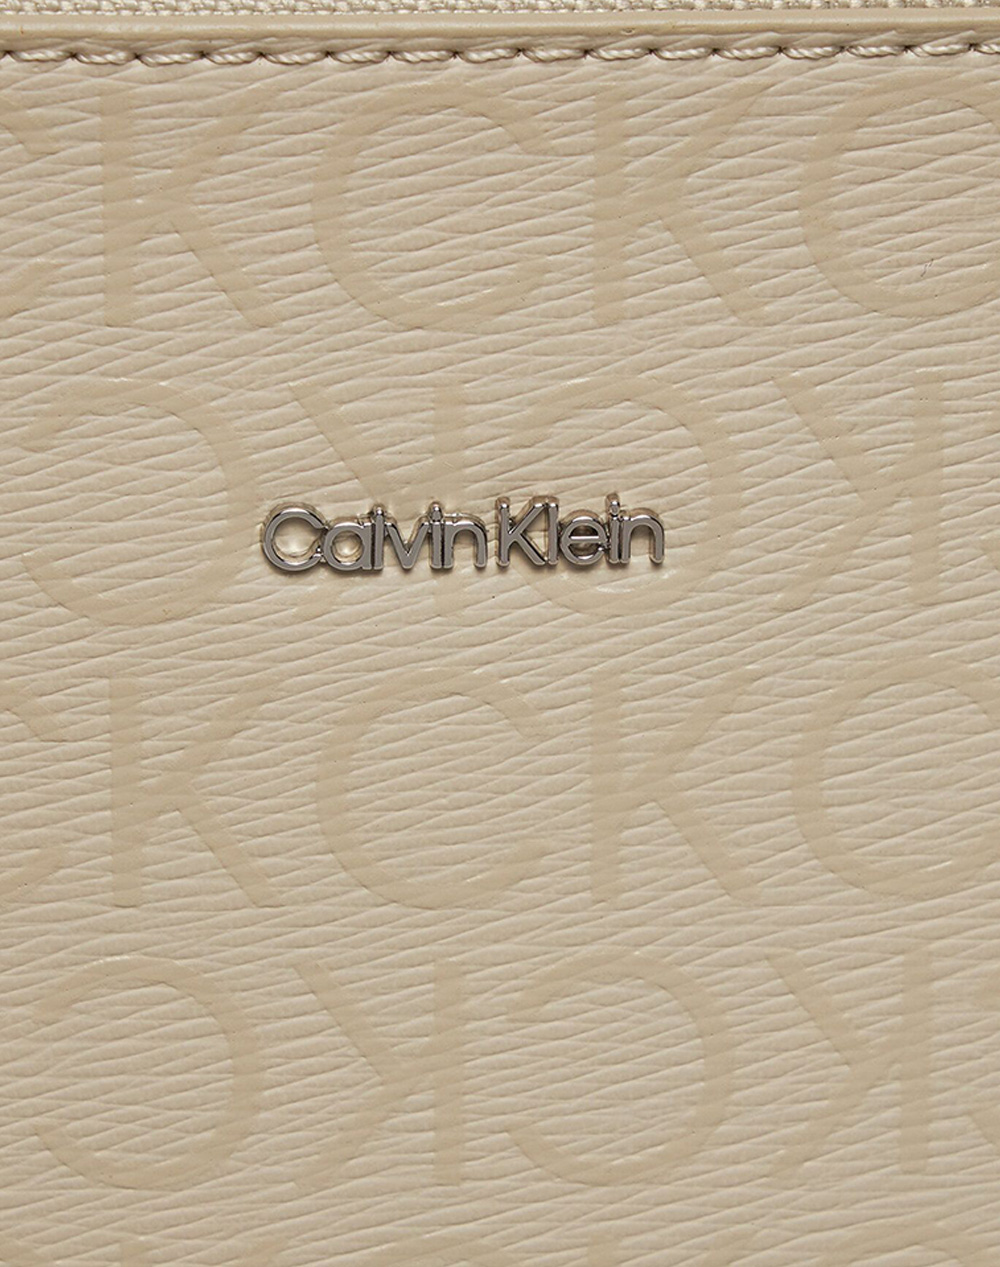 CALVIN KLEIN SCULPTED SHOULDER BAG24 MONO (Dimensions: 24 x 20.5 x